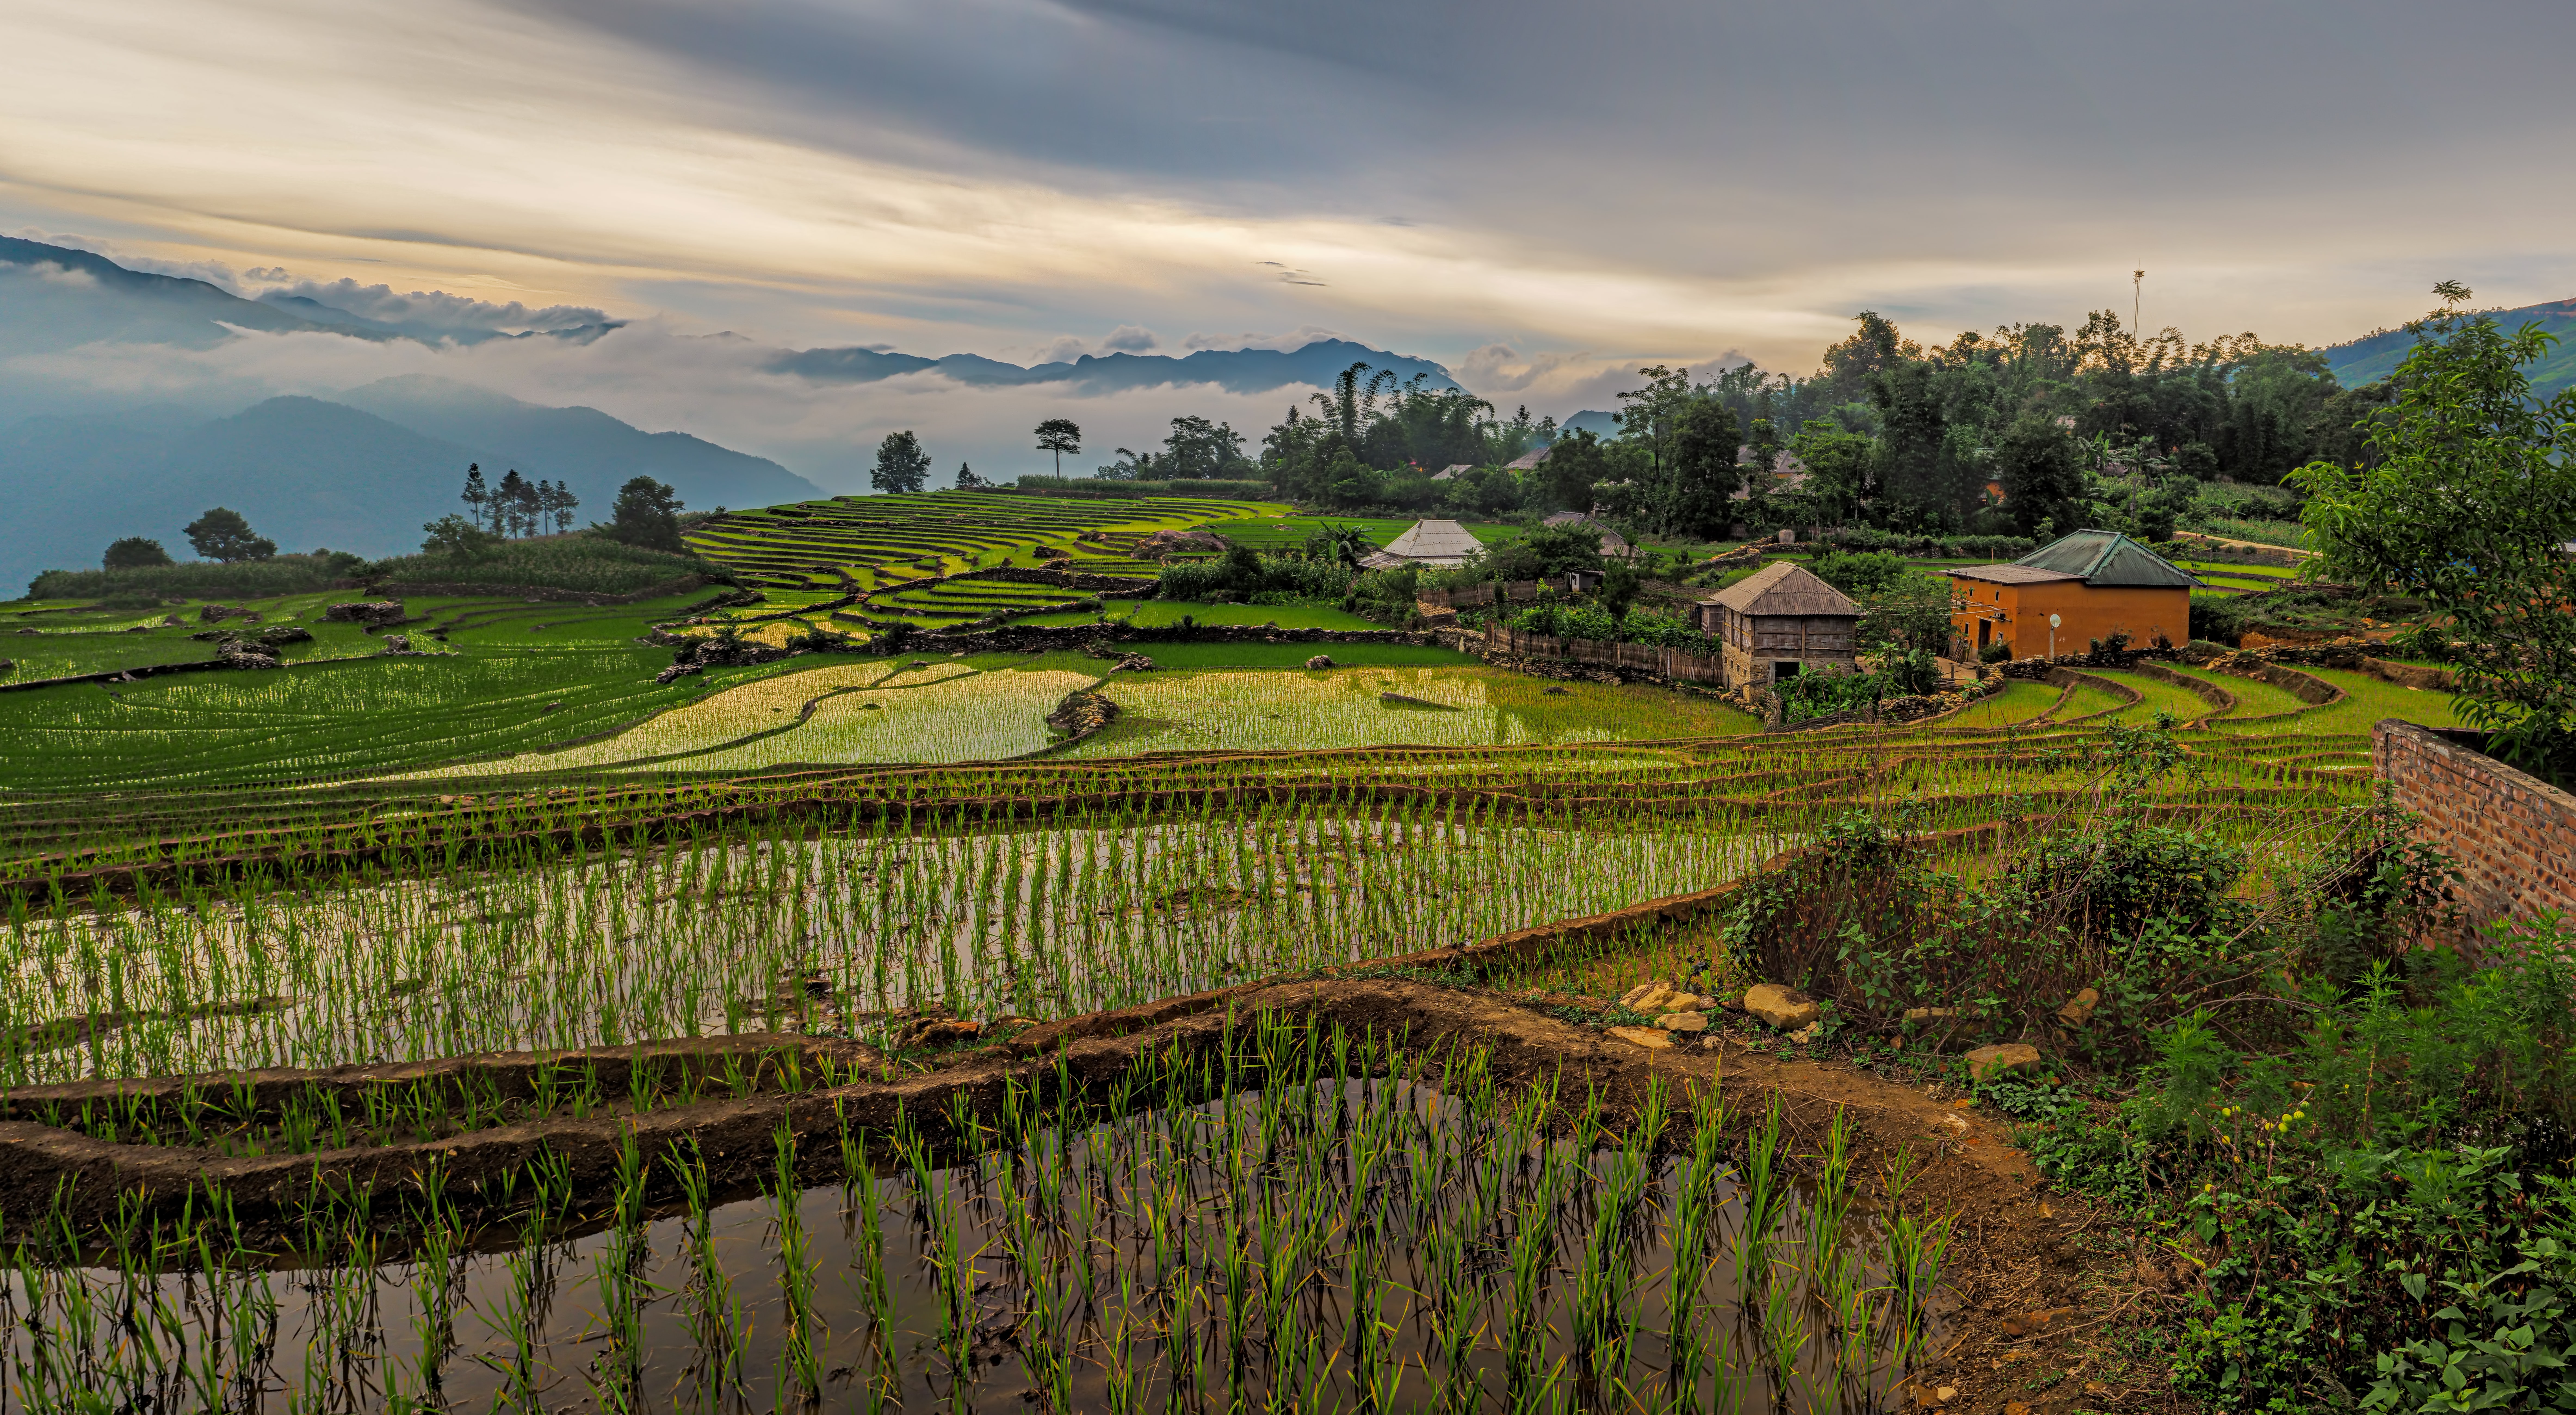 Green rice fields in Vietnam.